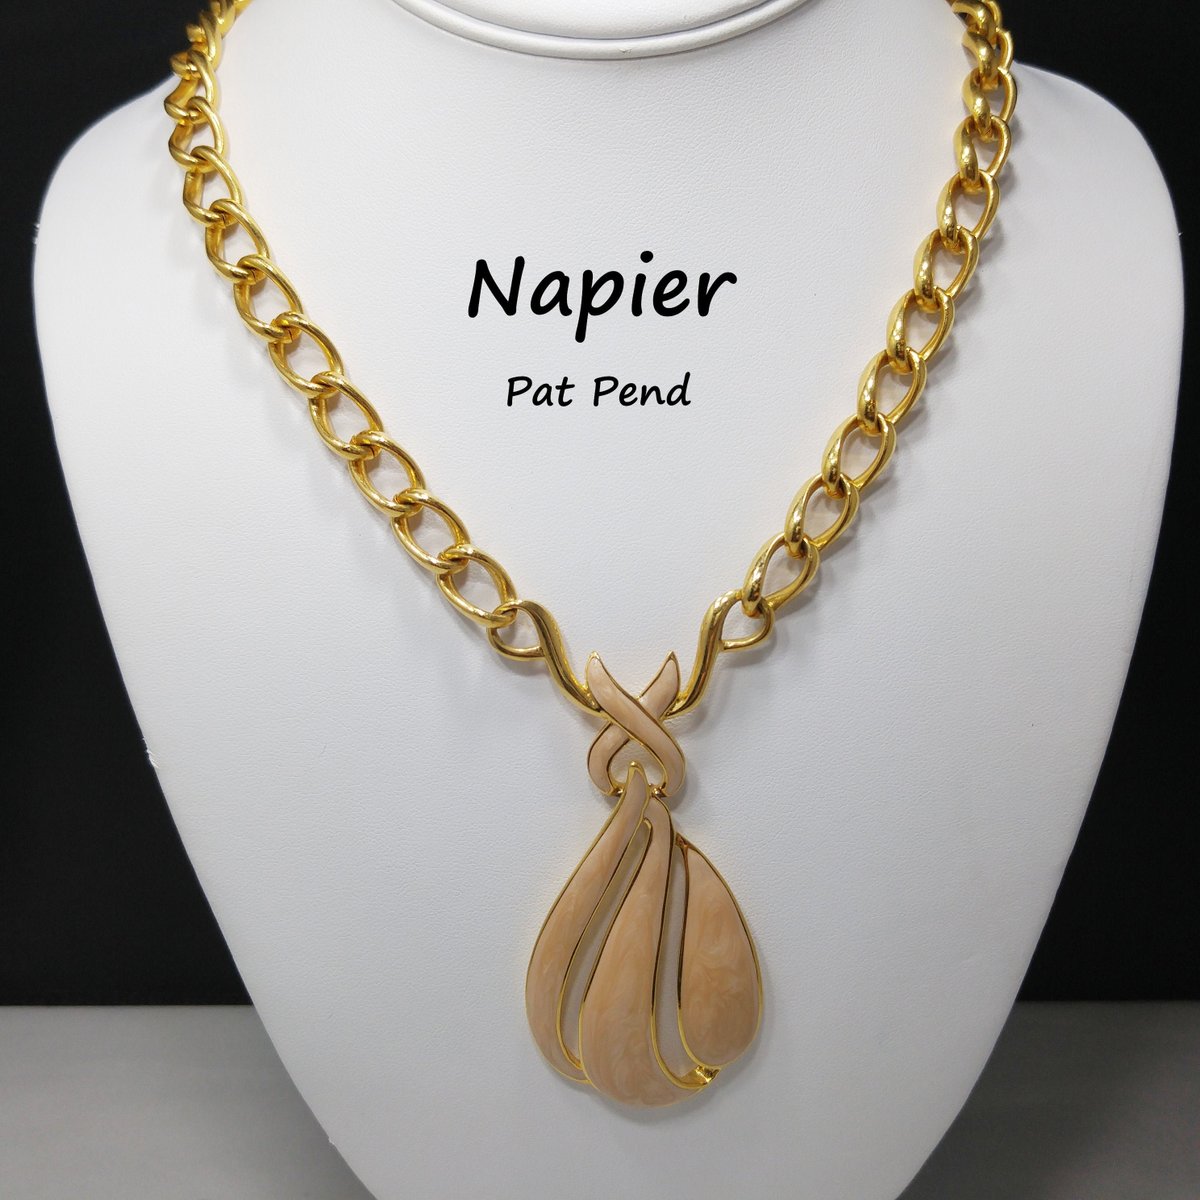 #etsy shop: Napier Pink Enamel Pendant Necklace, Gold Plated, 1980s Vintage Jewelry etsy.me/2E7Mzwa #gold #pink #women #napiernecklace #creamypink #pinkenamel #enamelnecklace #pinkgold #1980snecklace